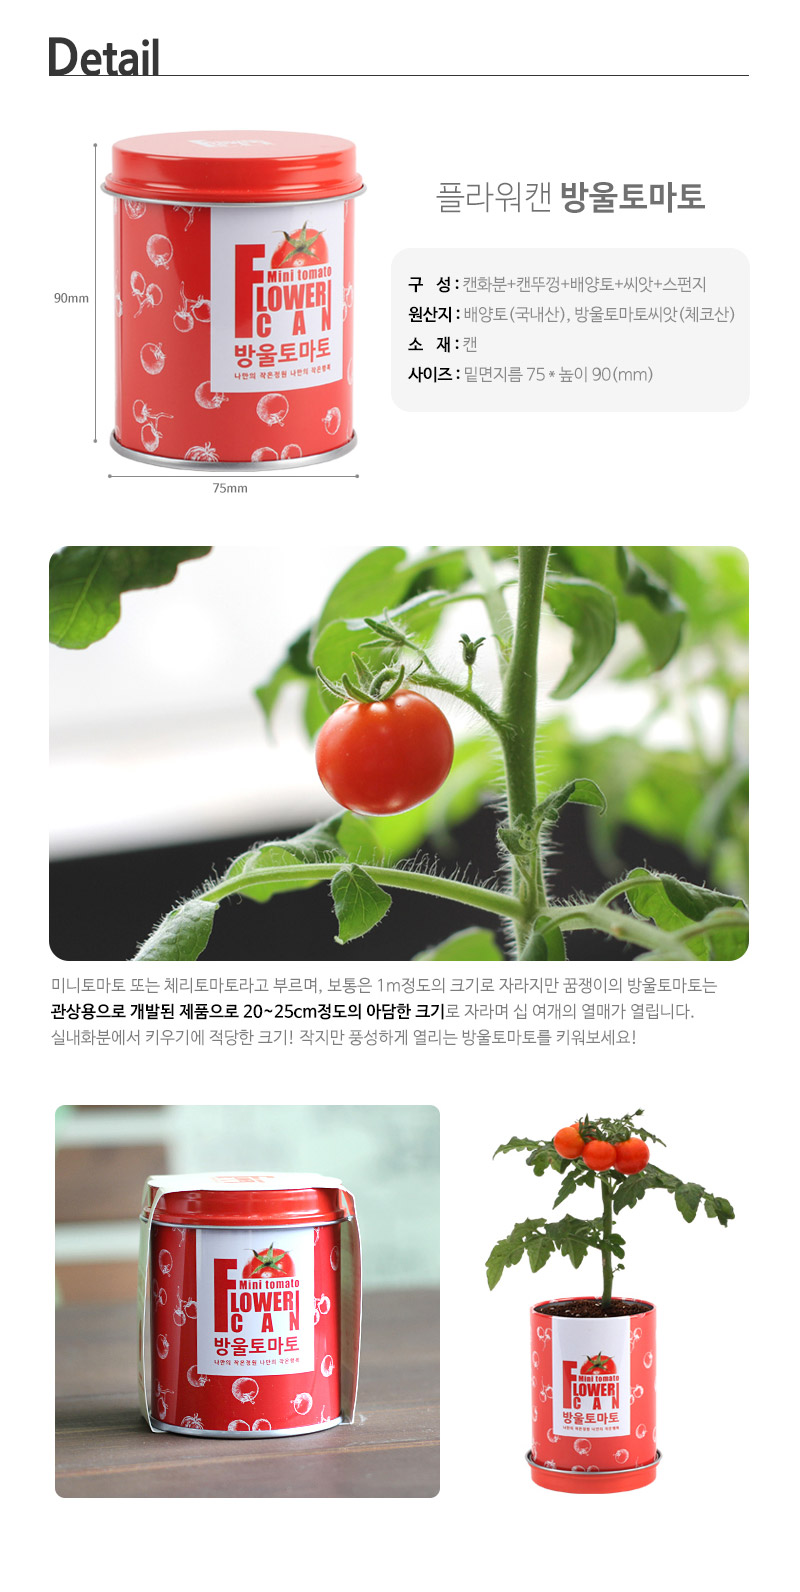 flowercan-cherry-tomato_02.jpg